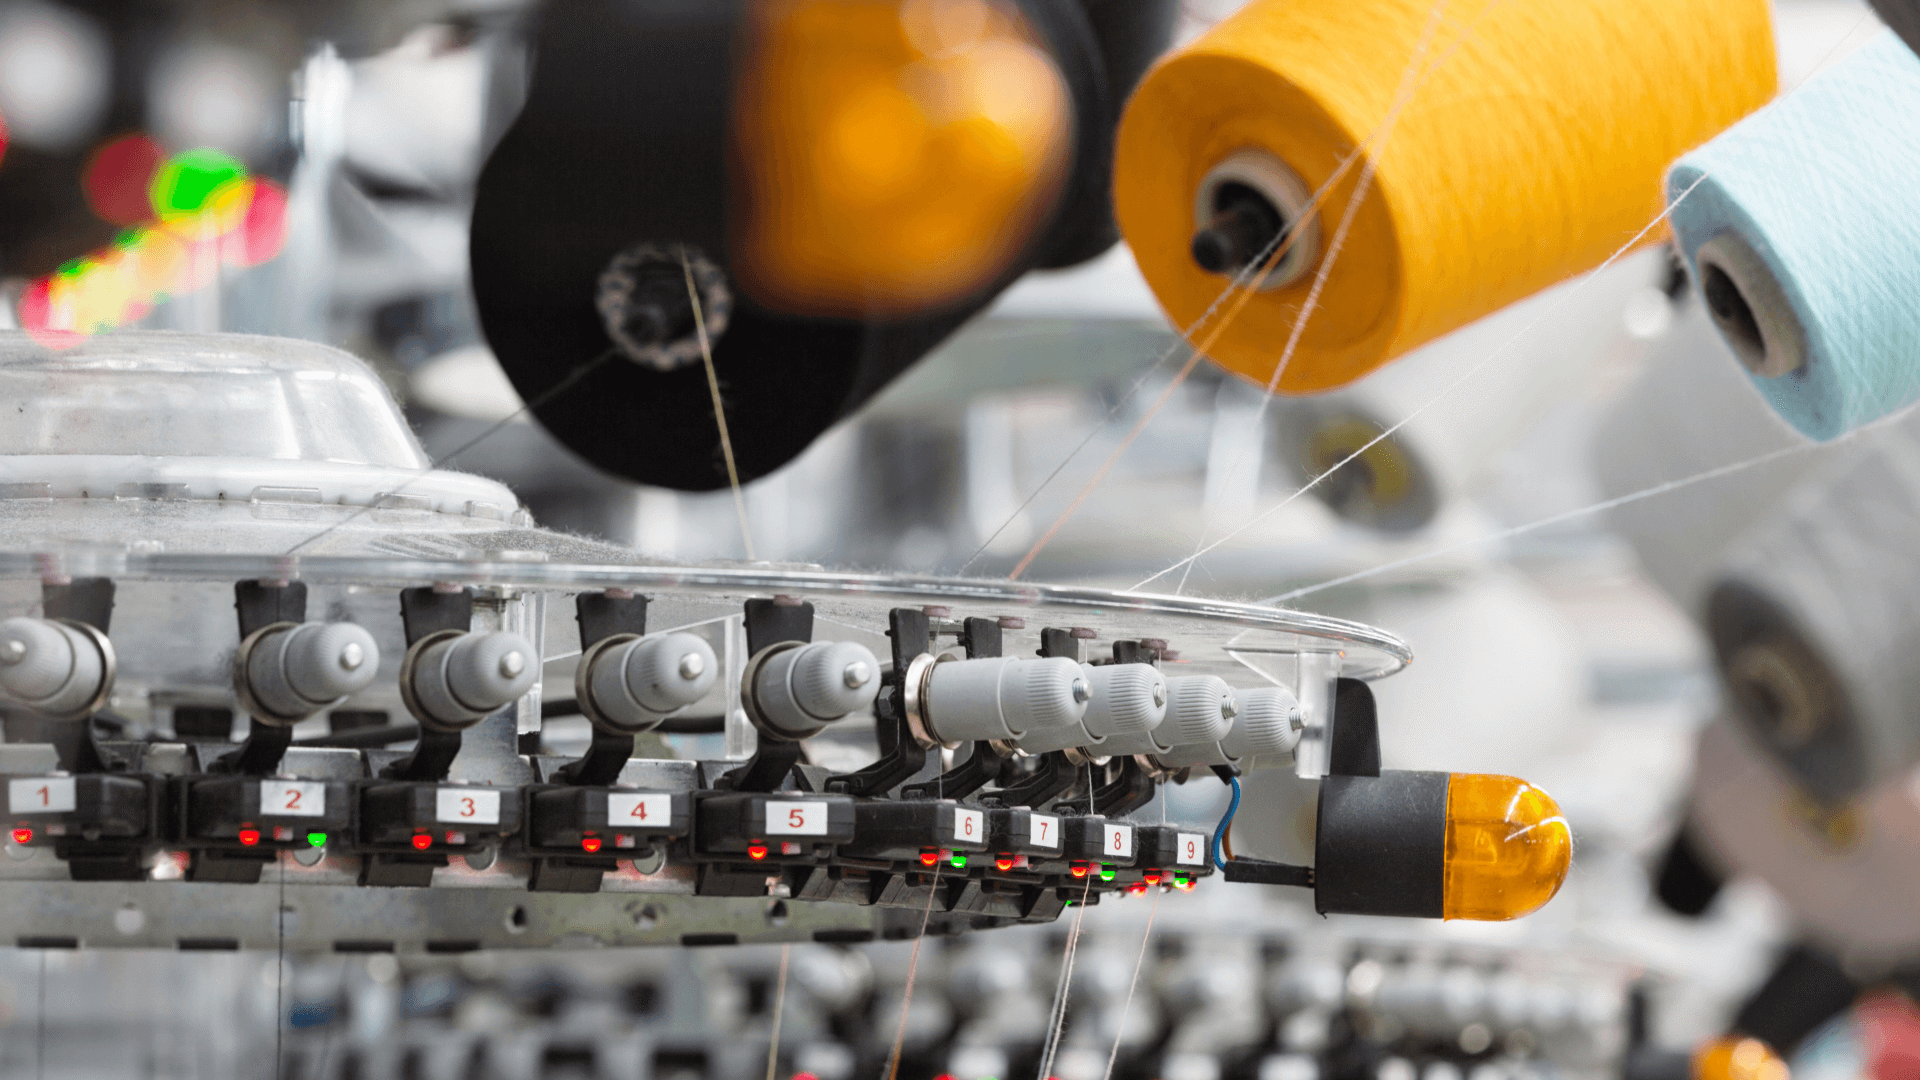 Portuguese textile industry technology